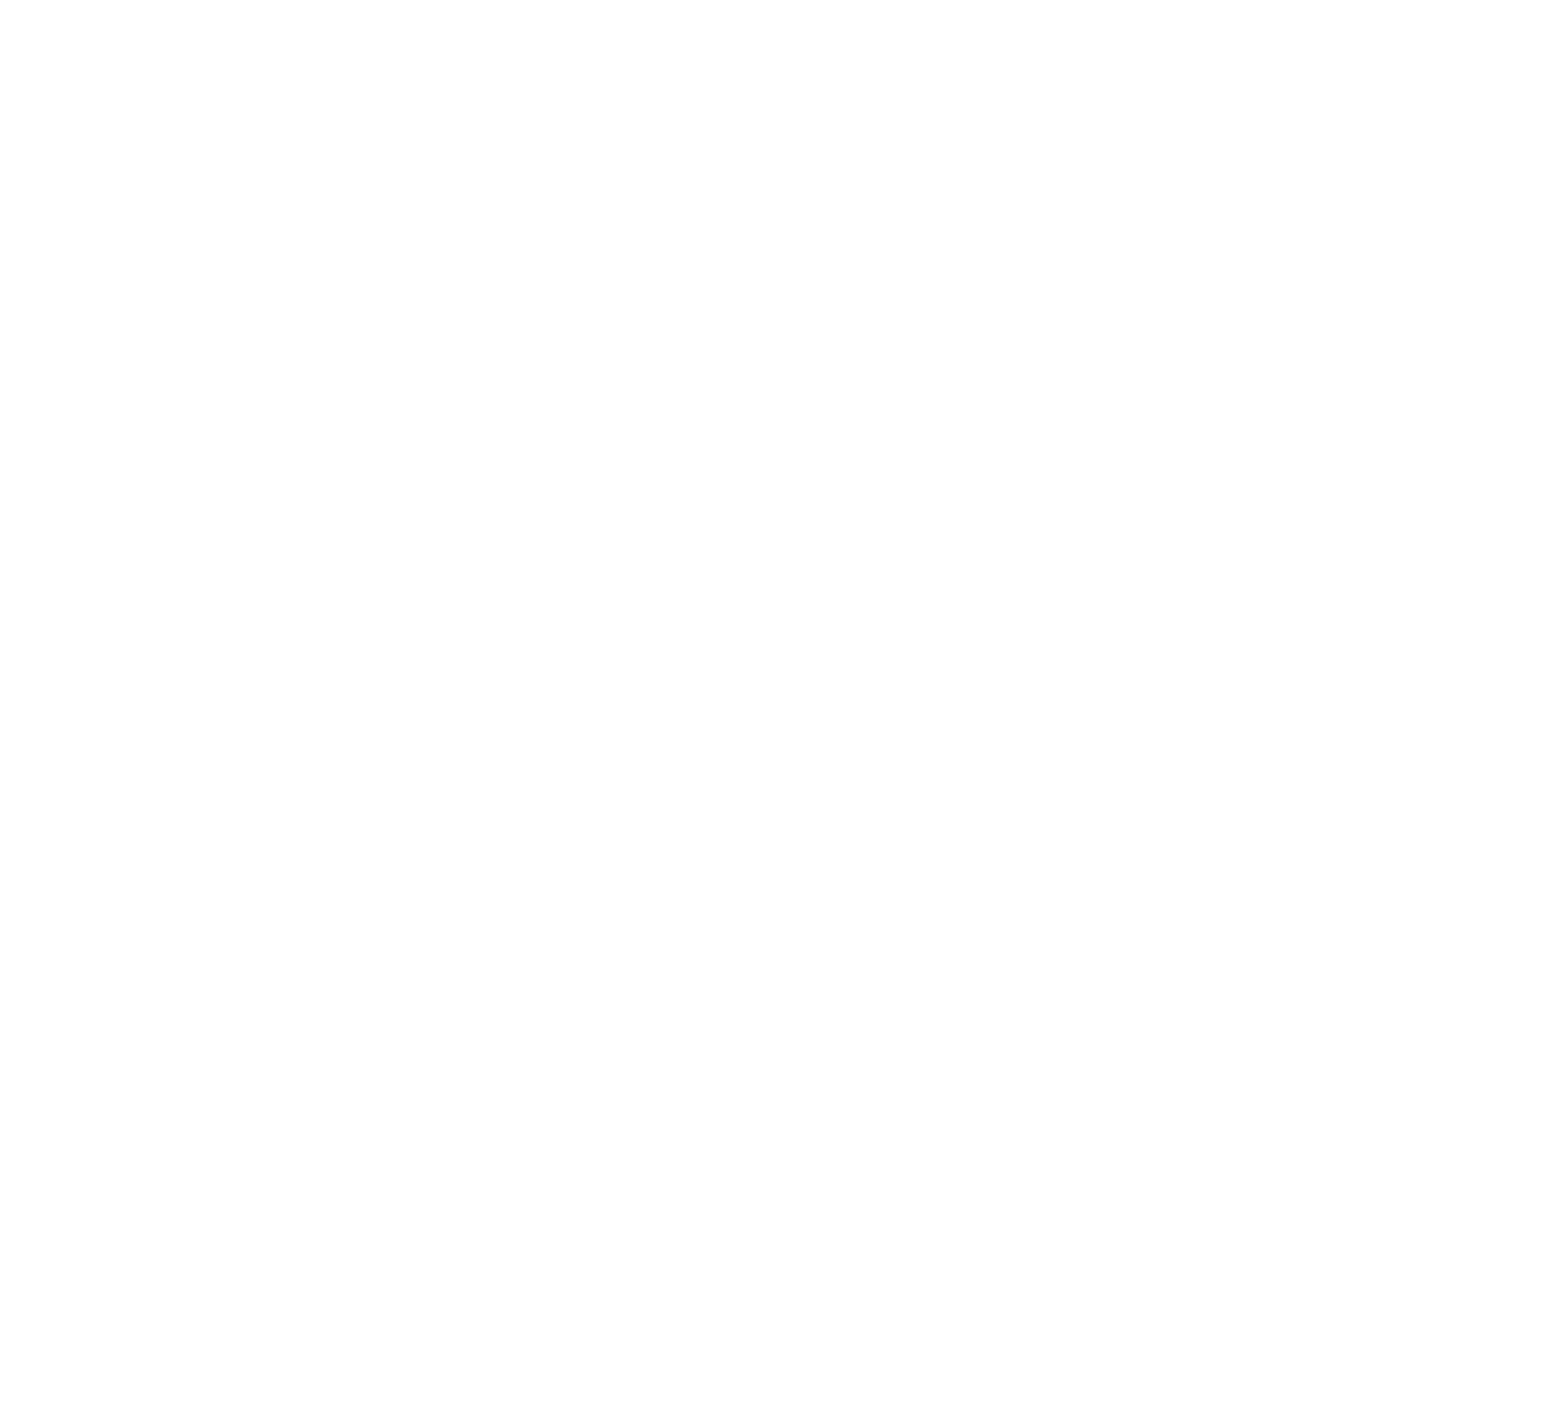 Foshna logo